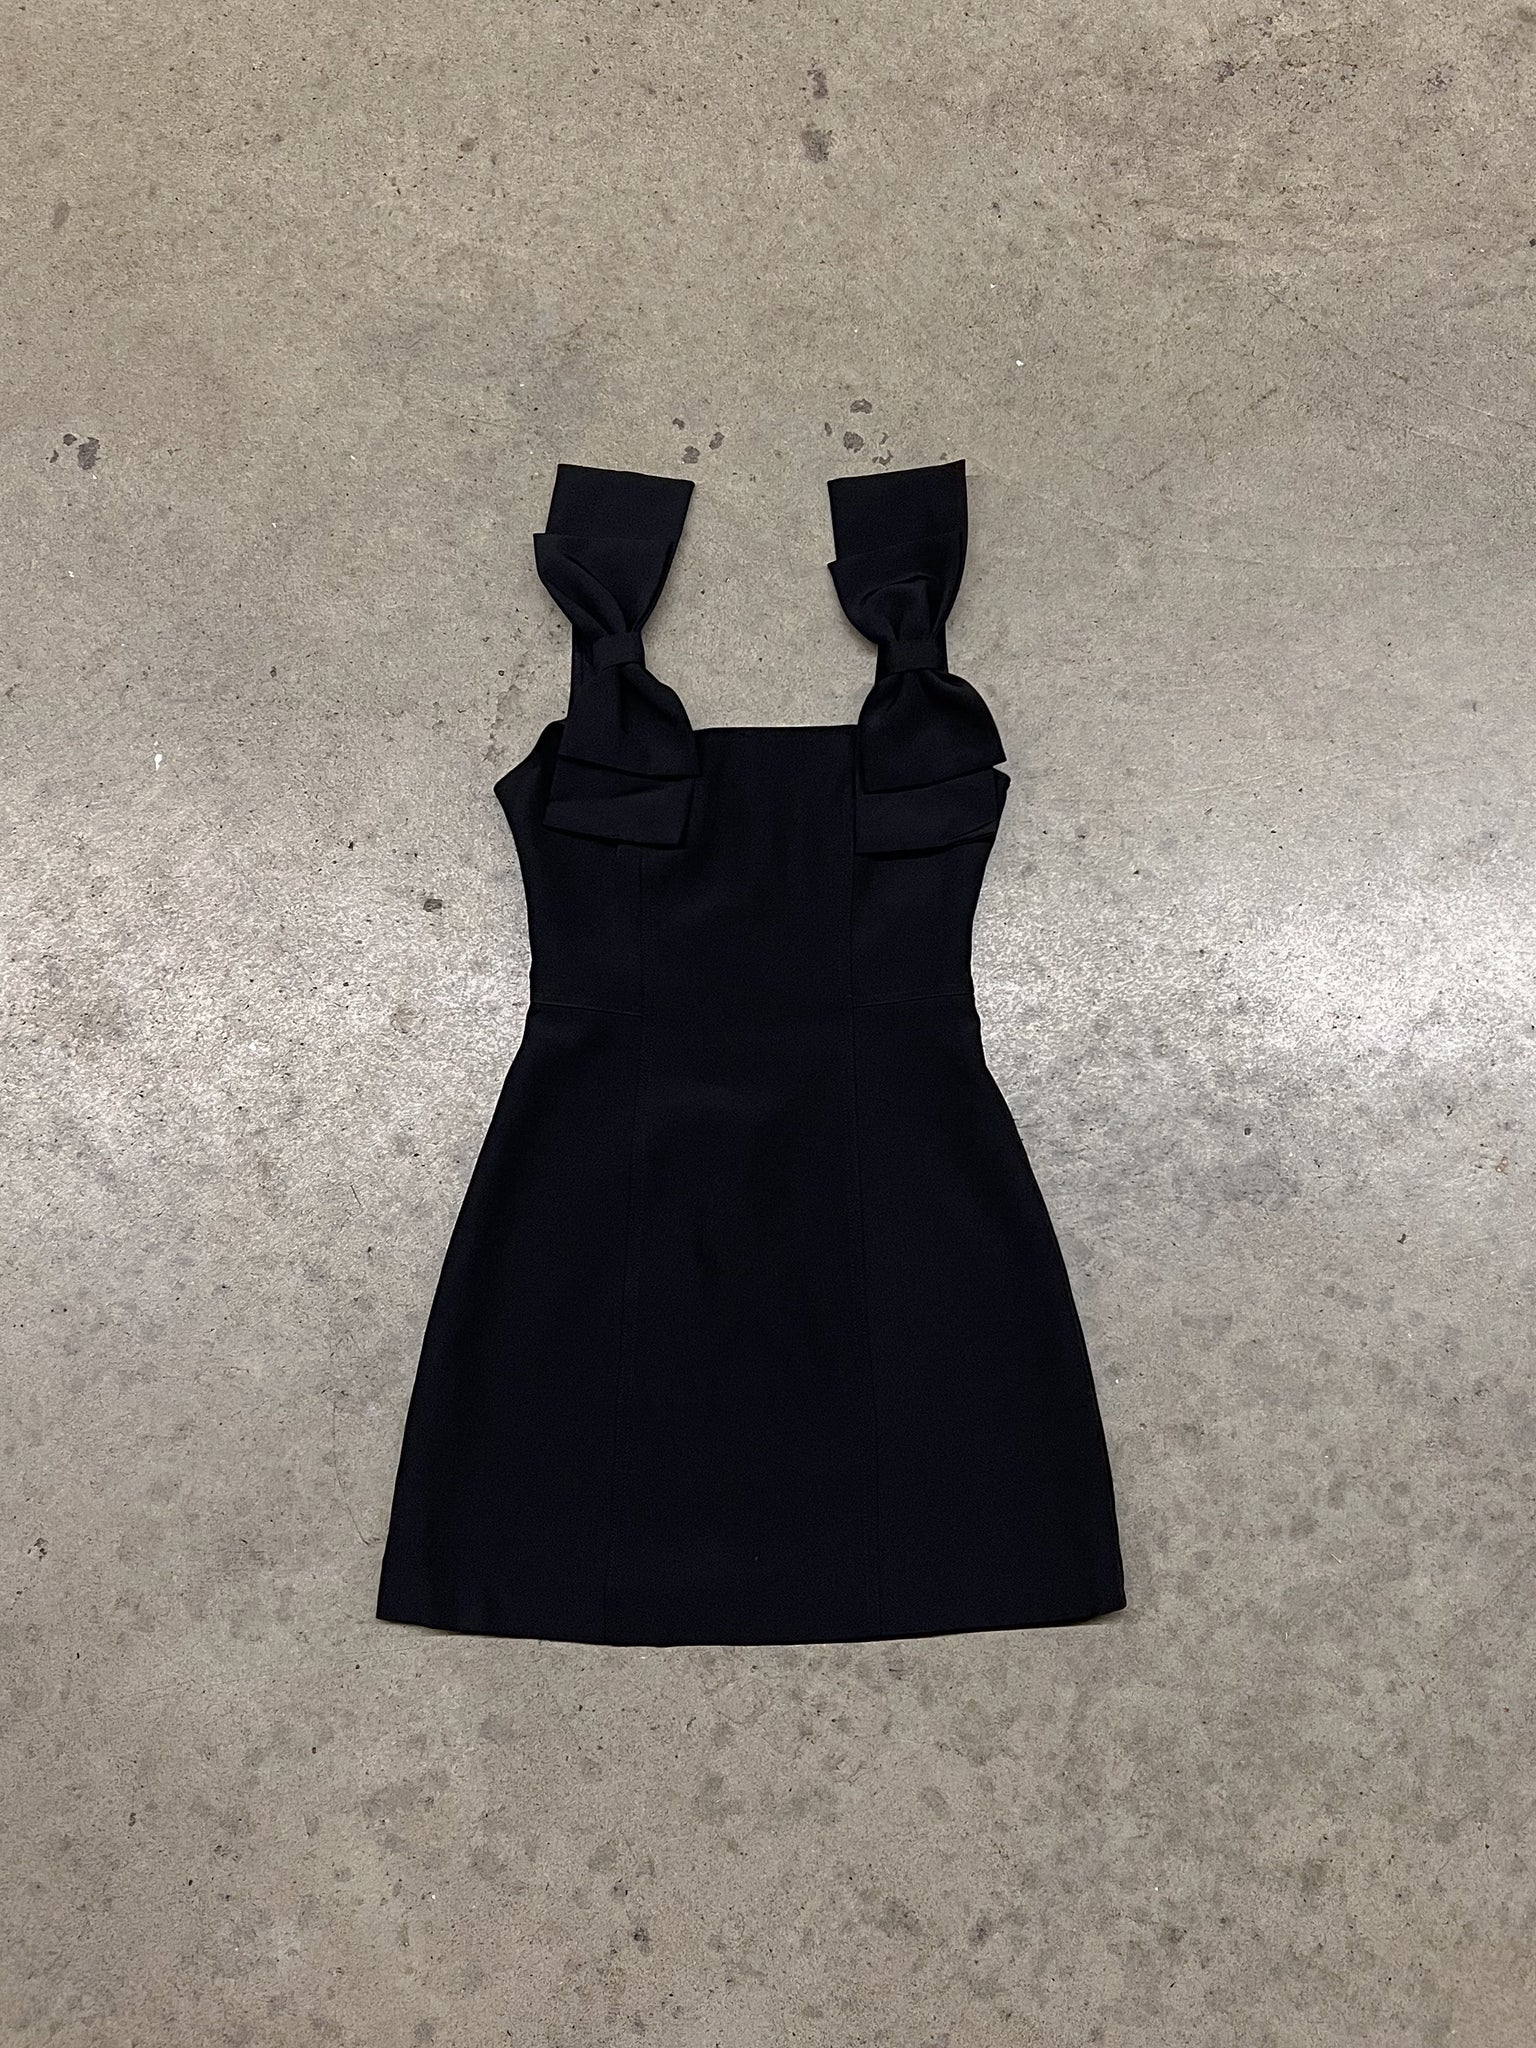 BOOTY BELLE BLACK DRESS / SMALL